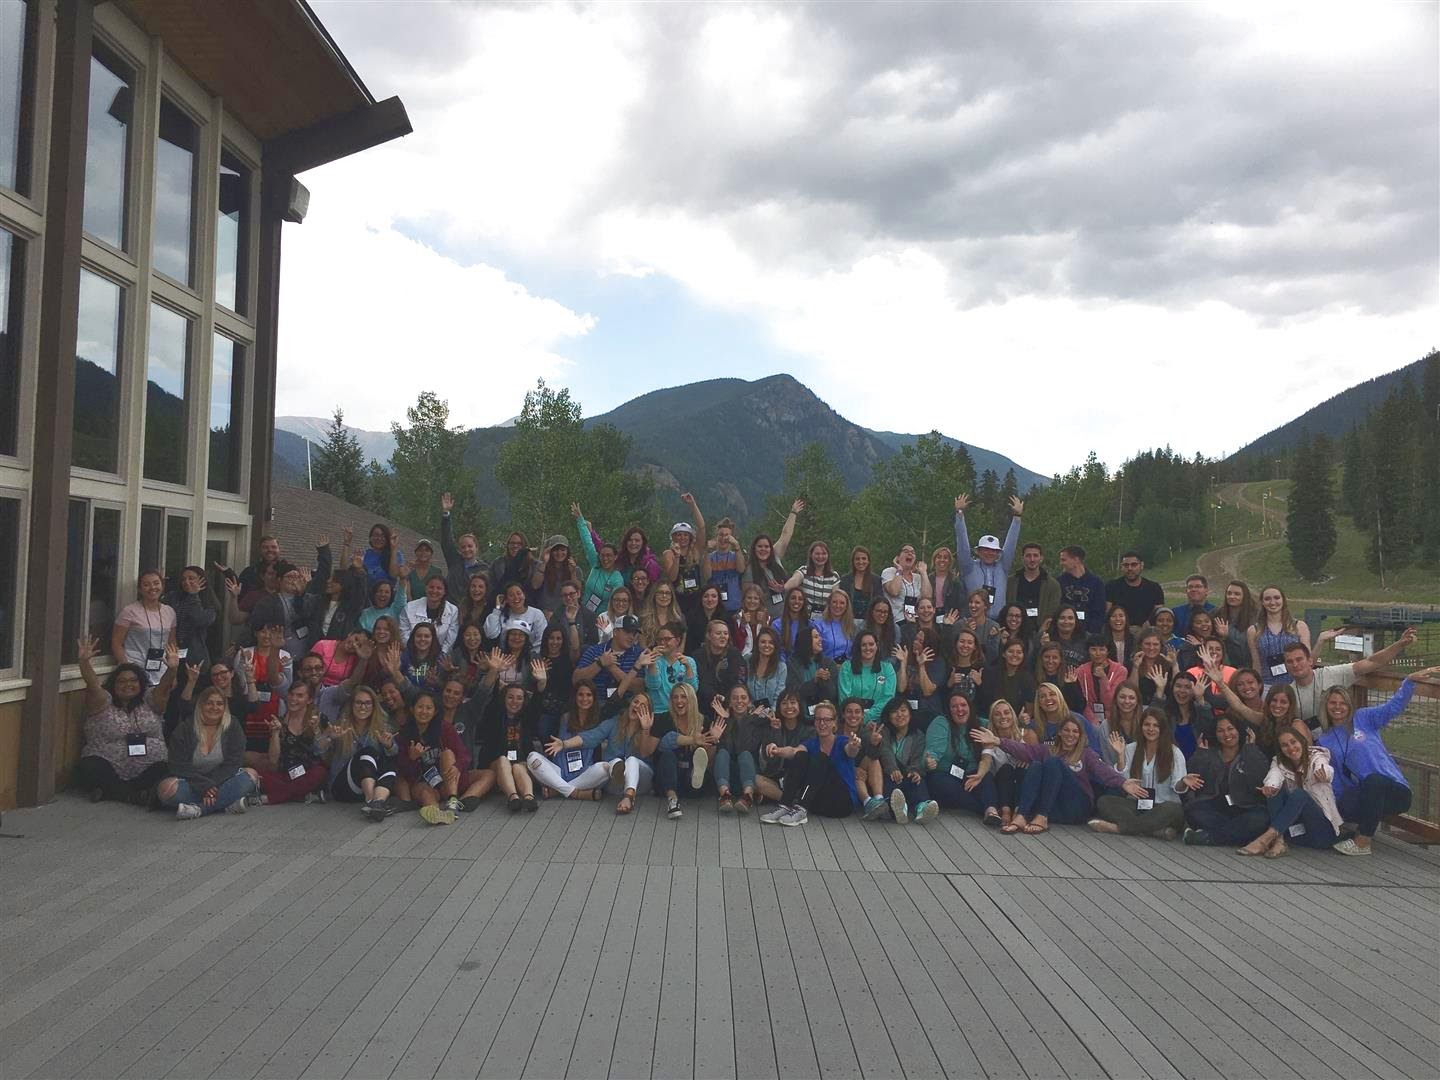 Oticon Audiology Summer Camp Celebrates 20 Years of Bringing Students